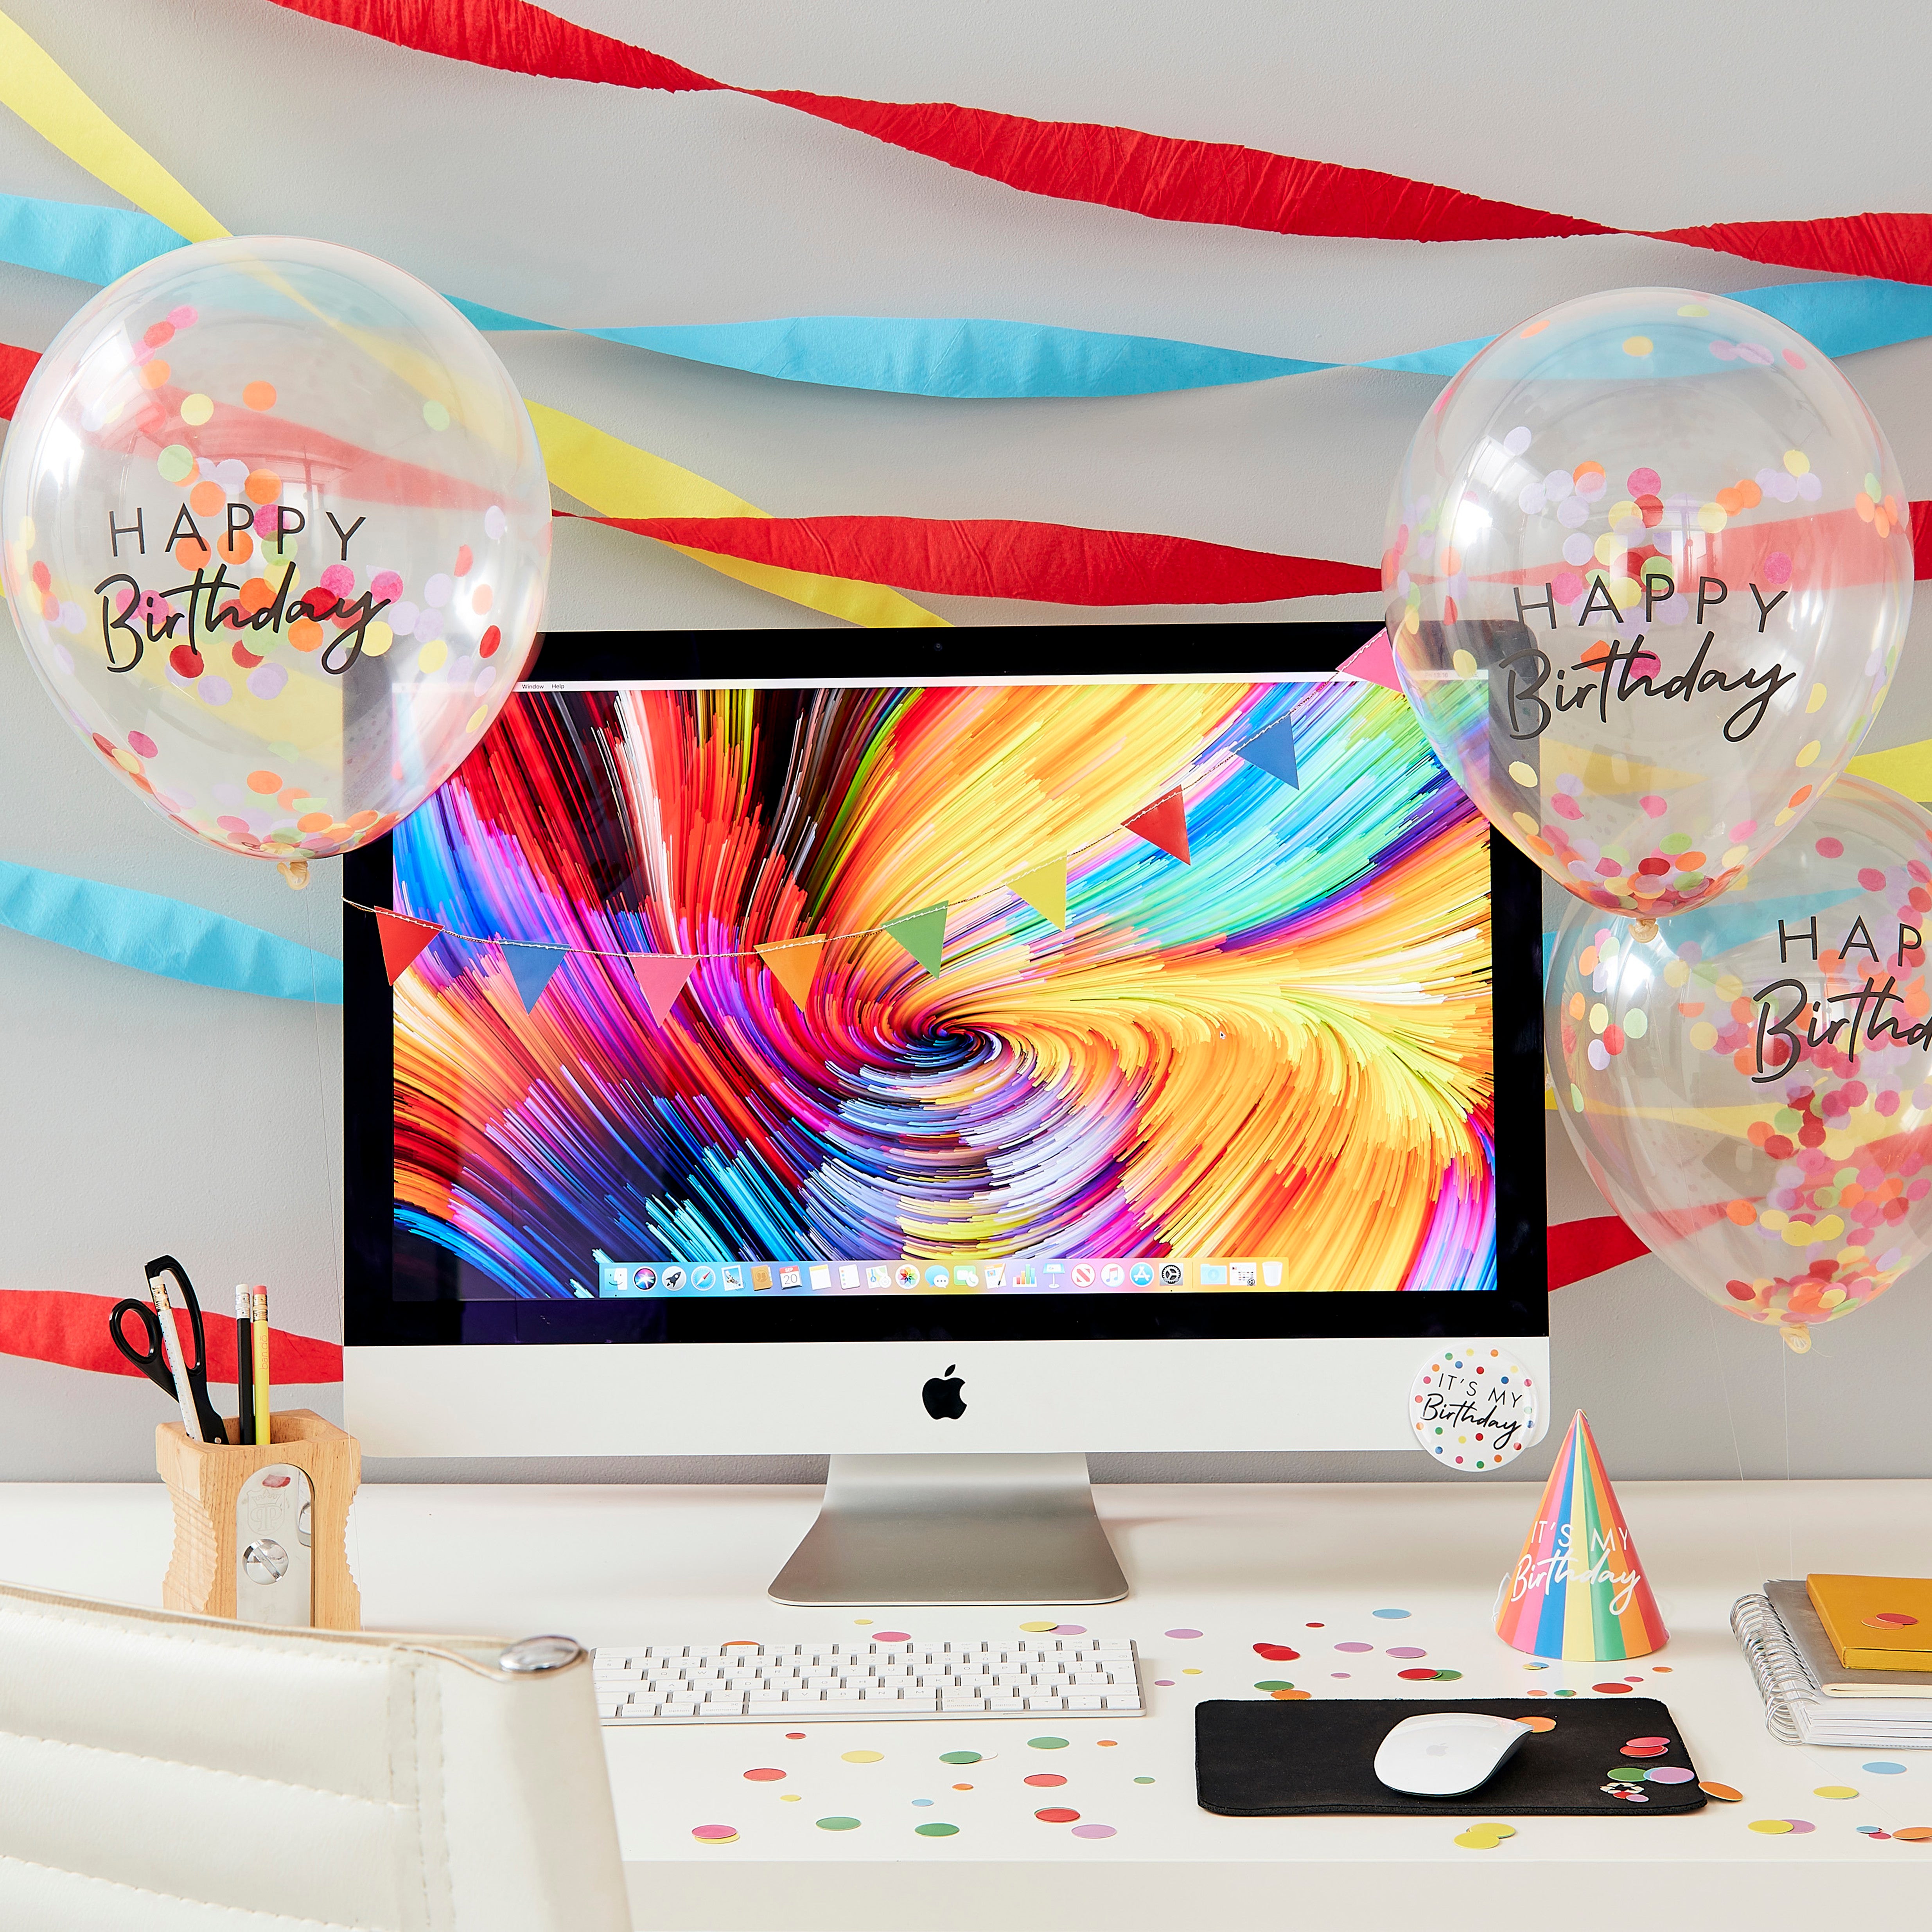 Office birthday set